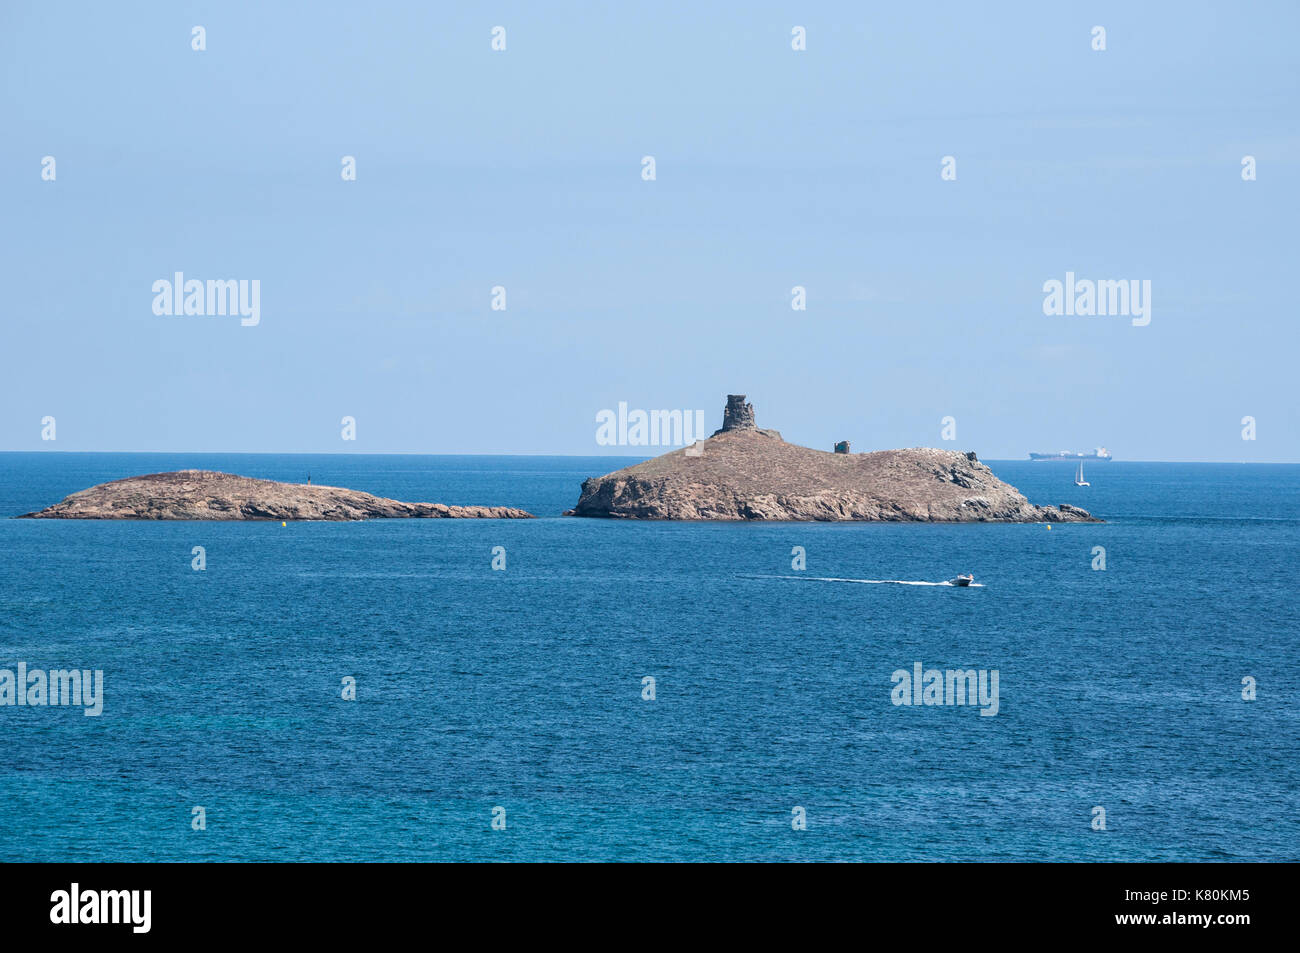 Korsika: das Mittelmeer am Cap Corse mit Blick auf das Naturschutzgebiet von Les Iles Finocchiarola (A Terra, Mezzana, finocchiarola) Stockfoto